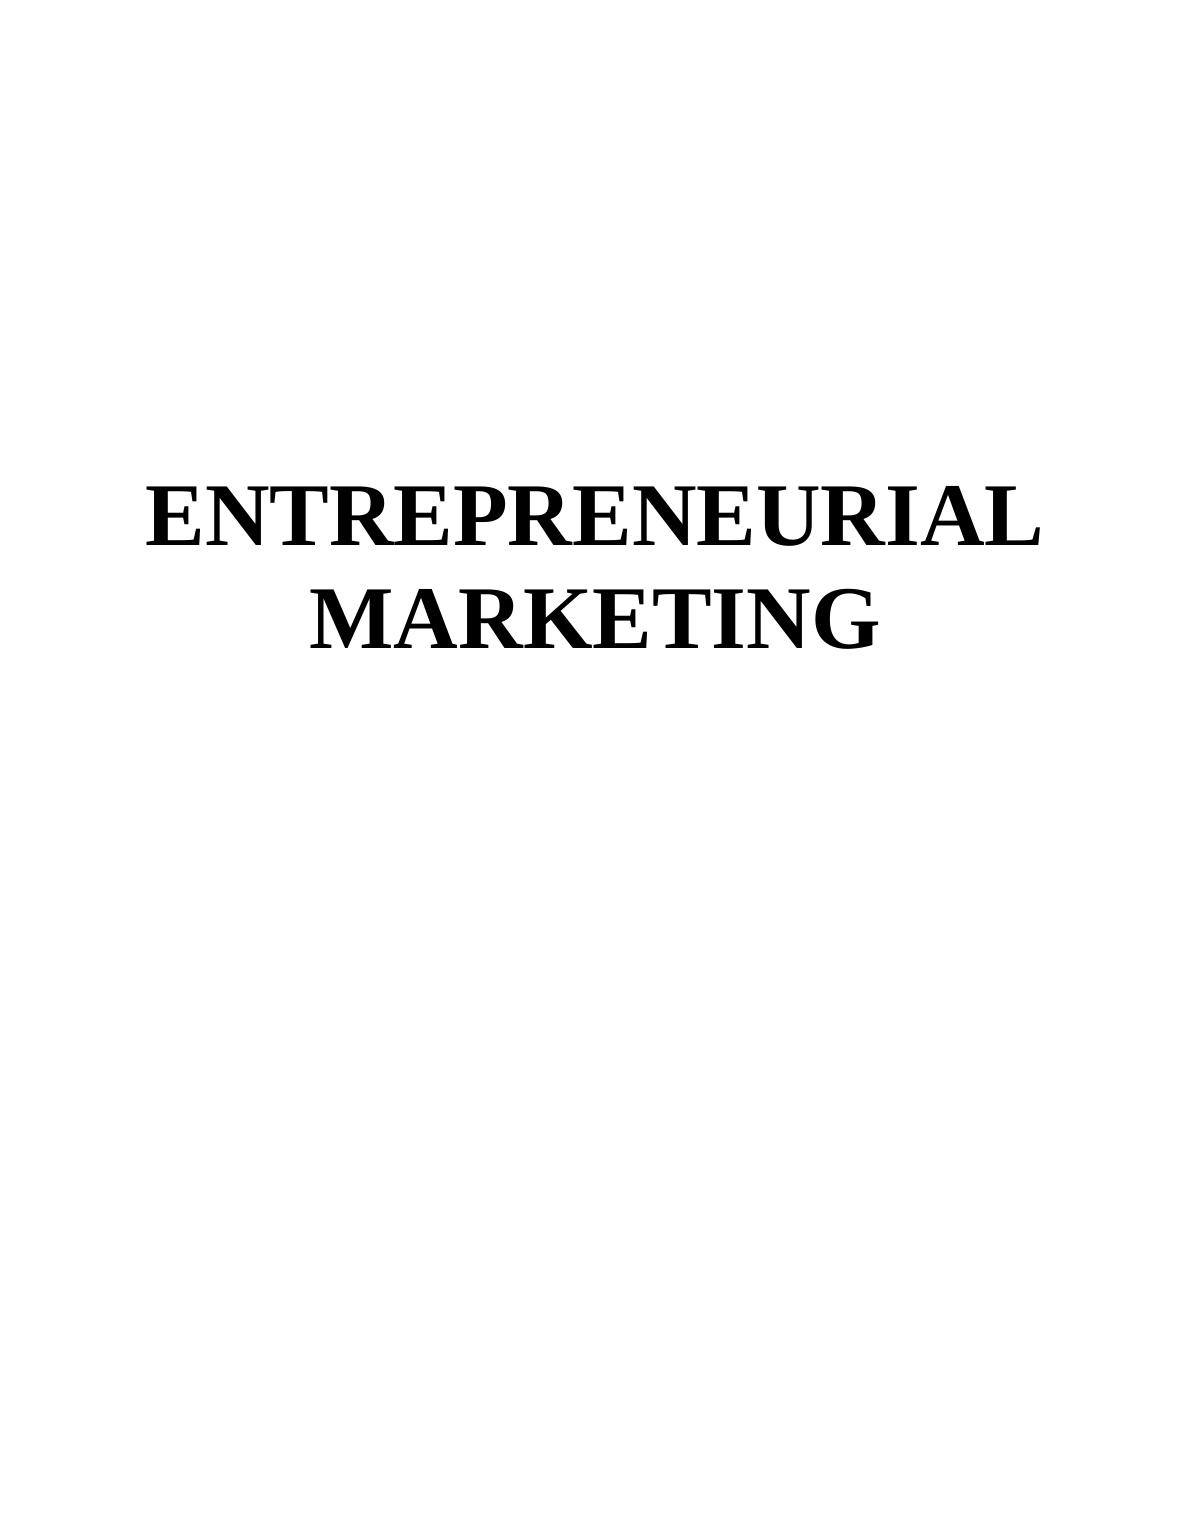 Entrepreneurial Marketing Assignment - Herrco Cosmetics_1